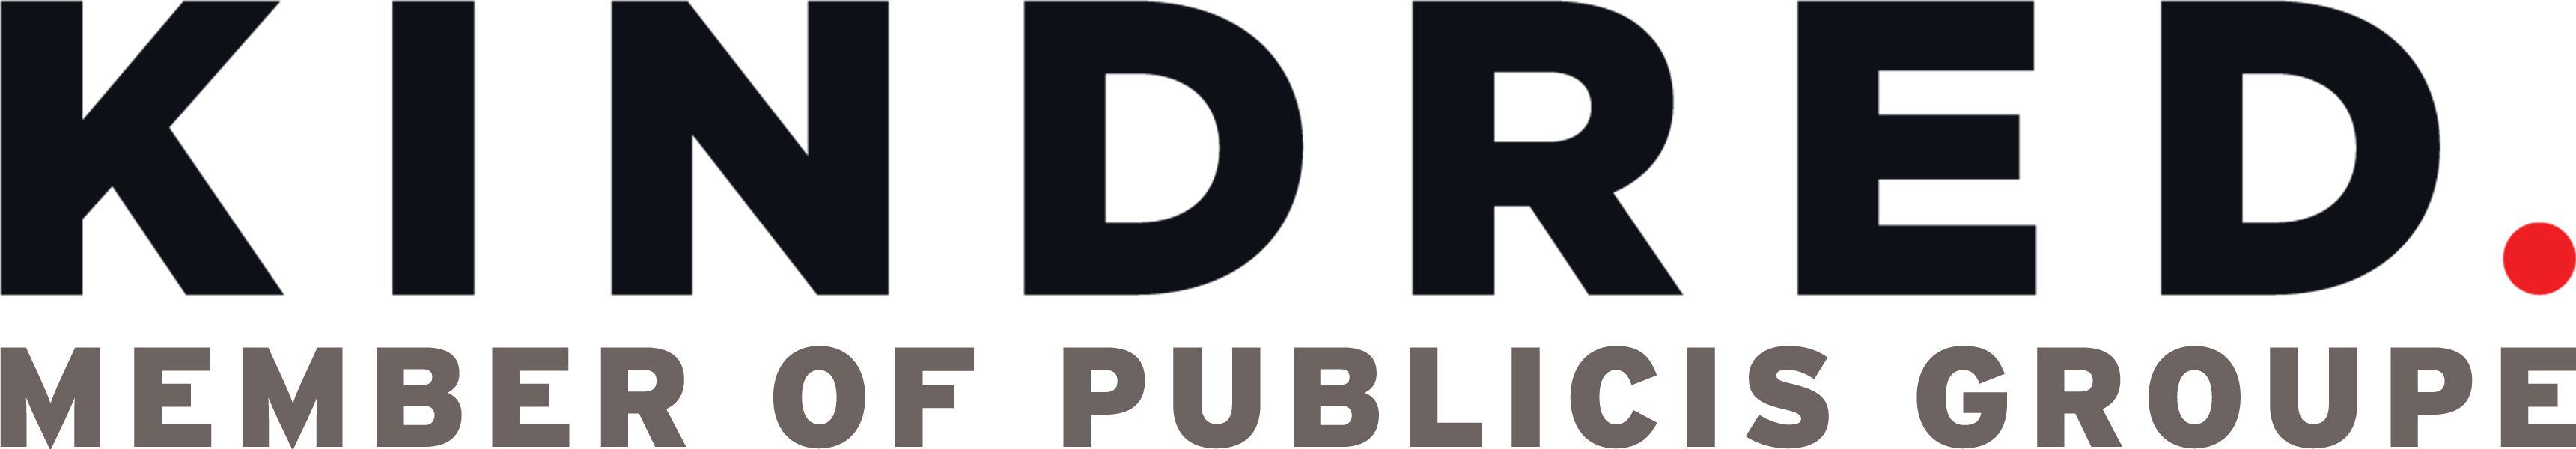 KINDRED Logo jpeg - Yves Le Roch (1)